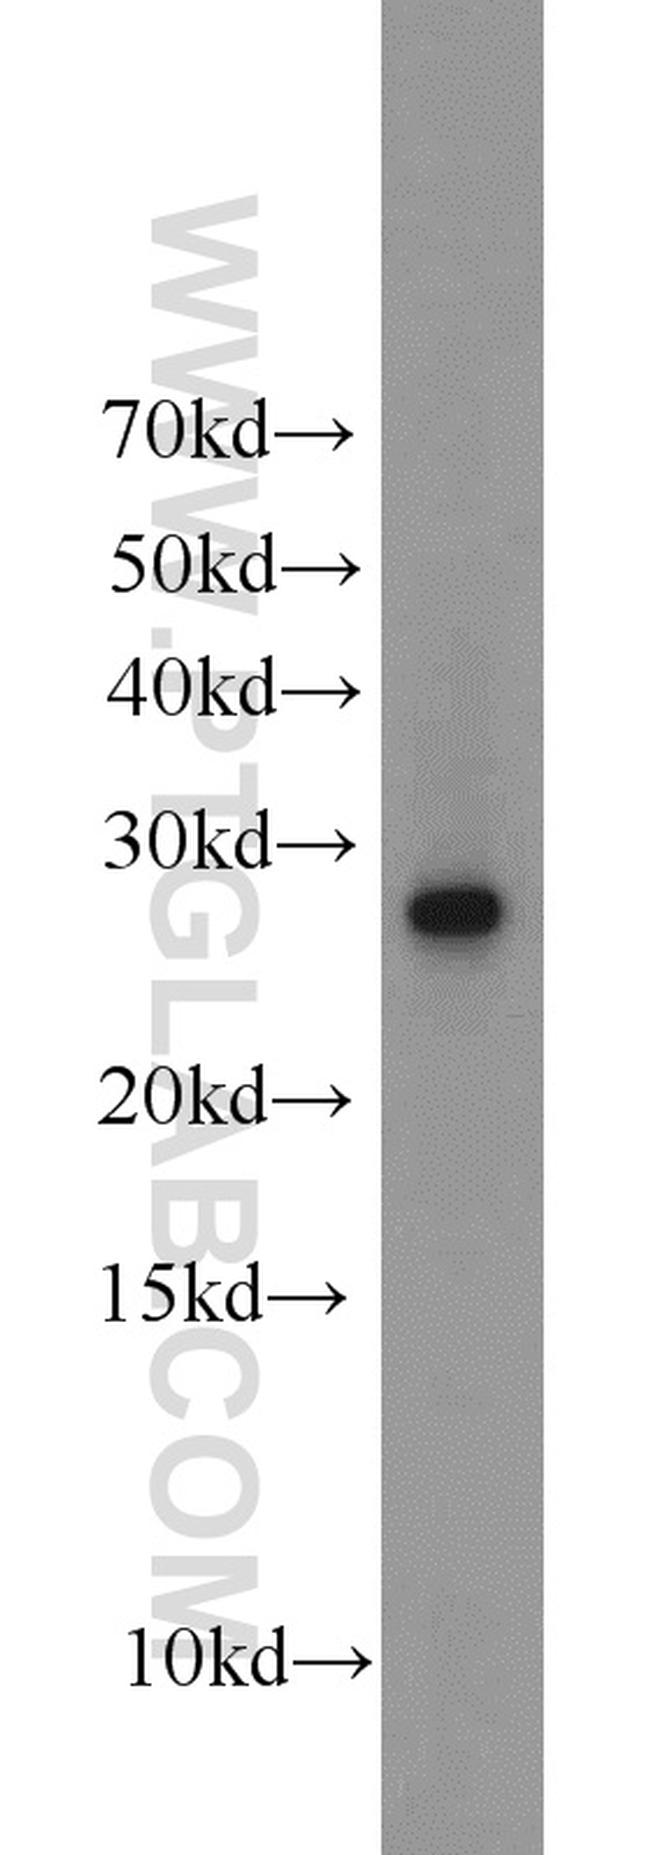 EXOSC5 Antibody in Western Blot (WB)